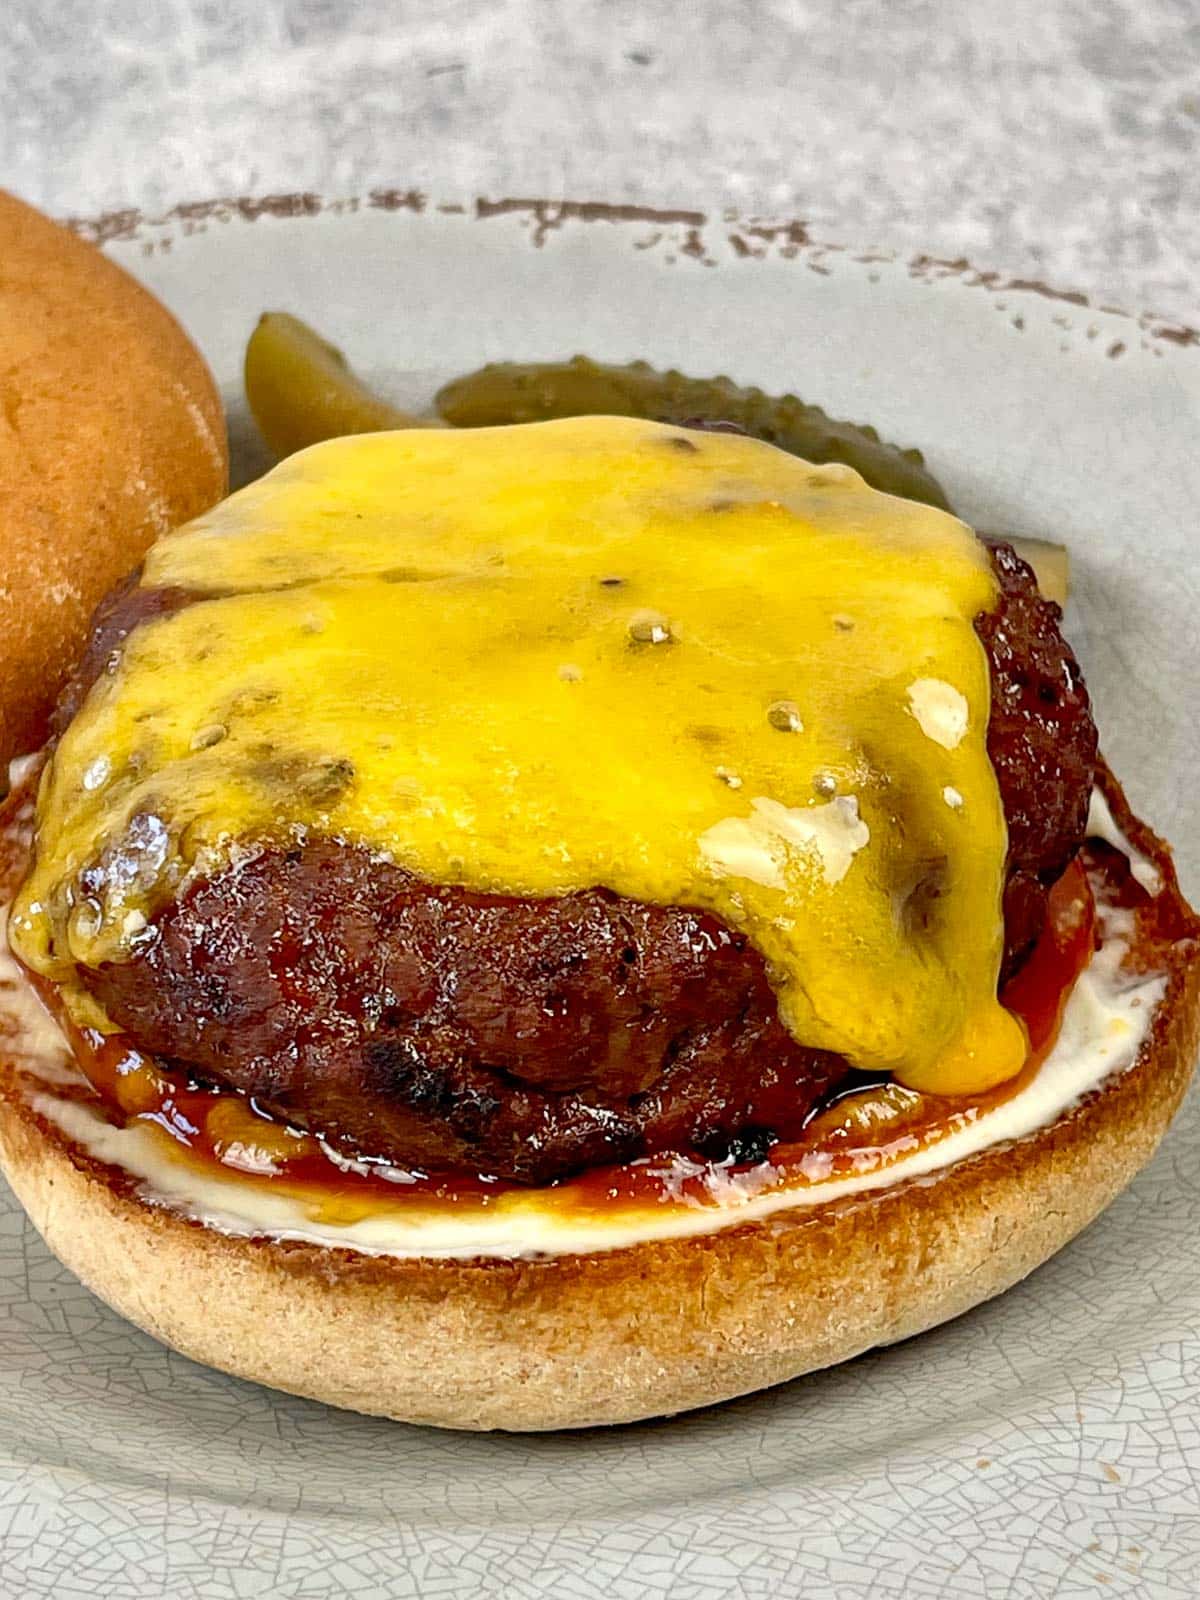 Cheeseburger on a burger roll.